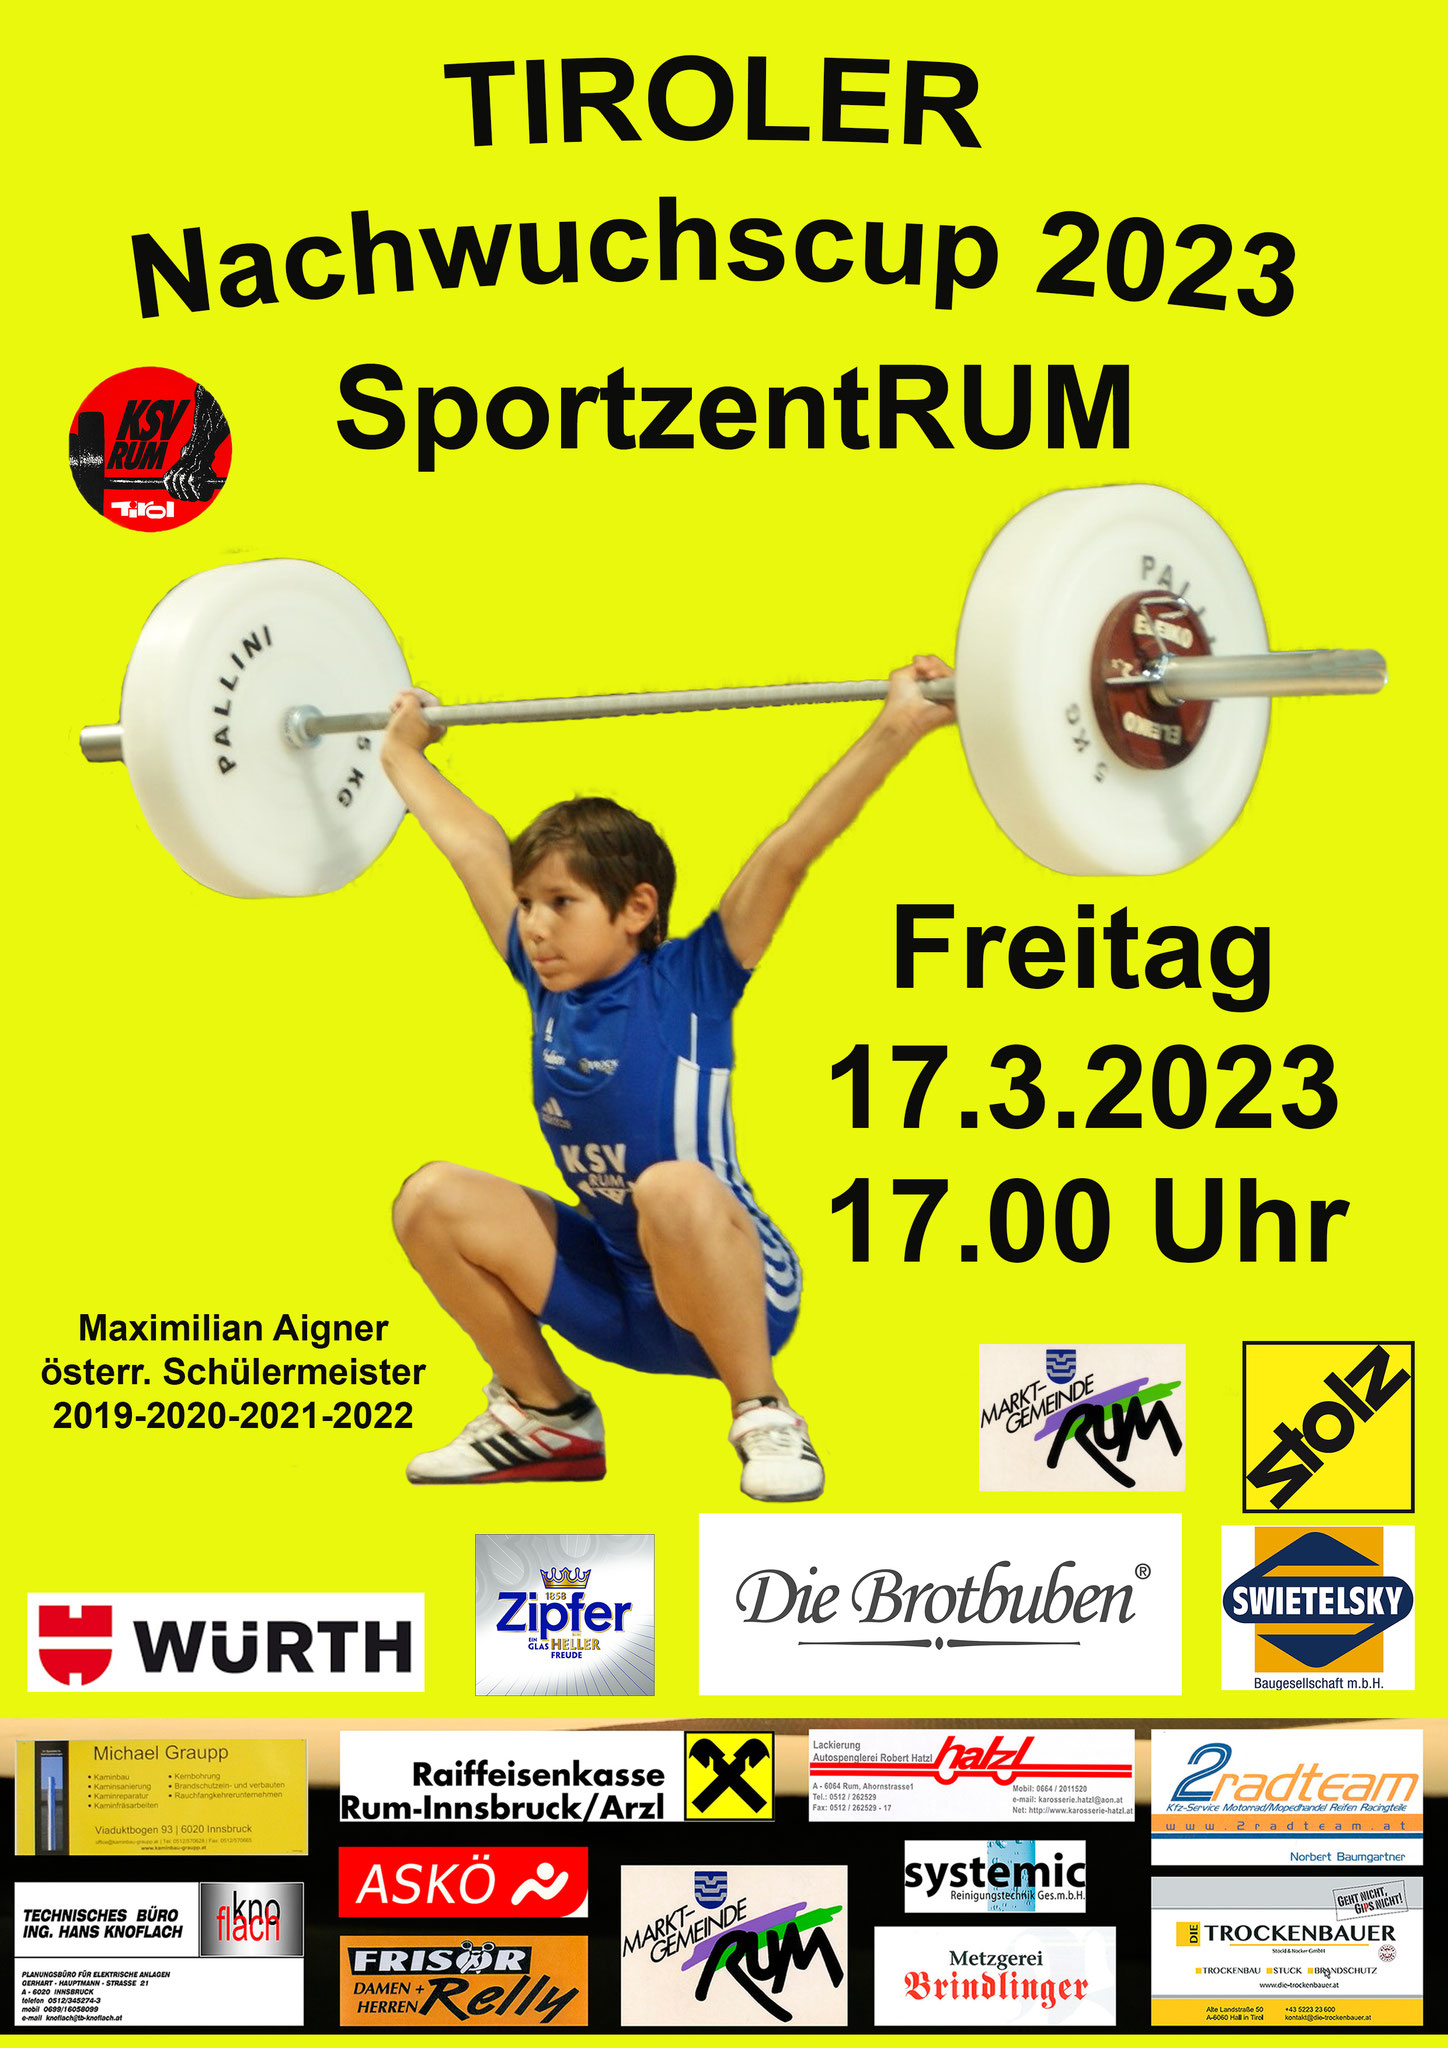 17.03.2023 - 1. Runde im Tiroler Nachwuchscup